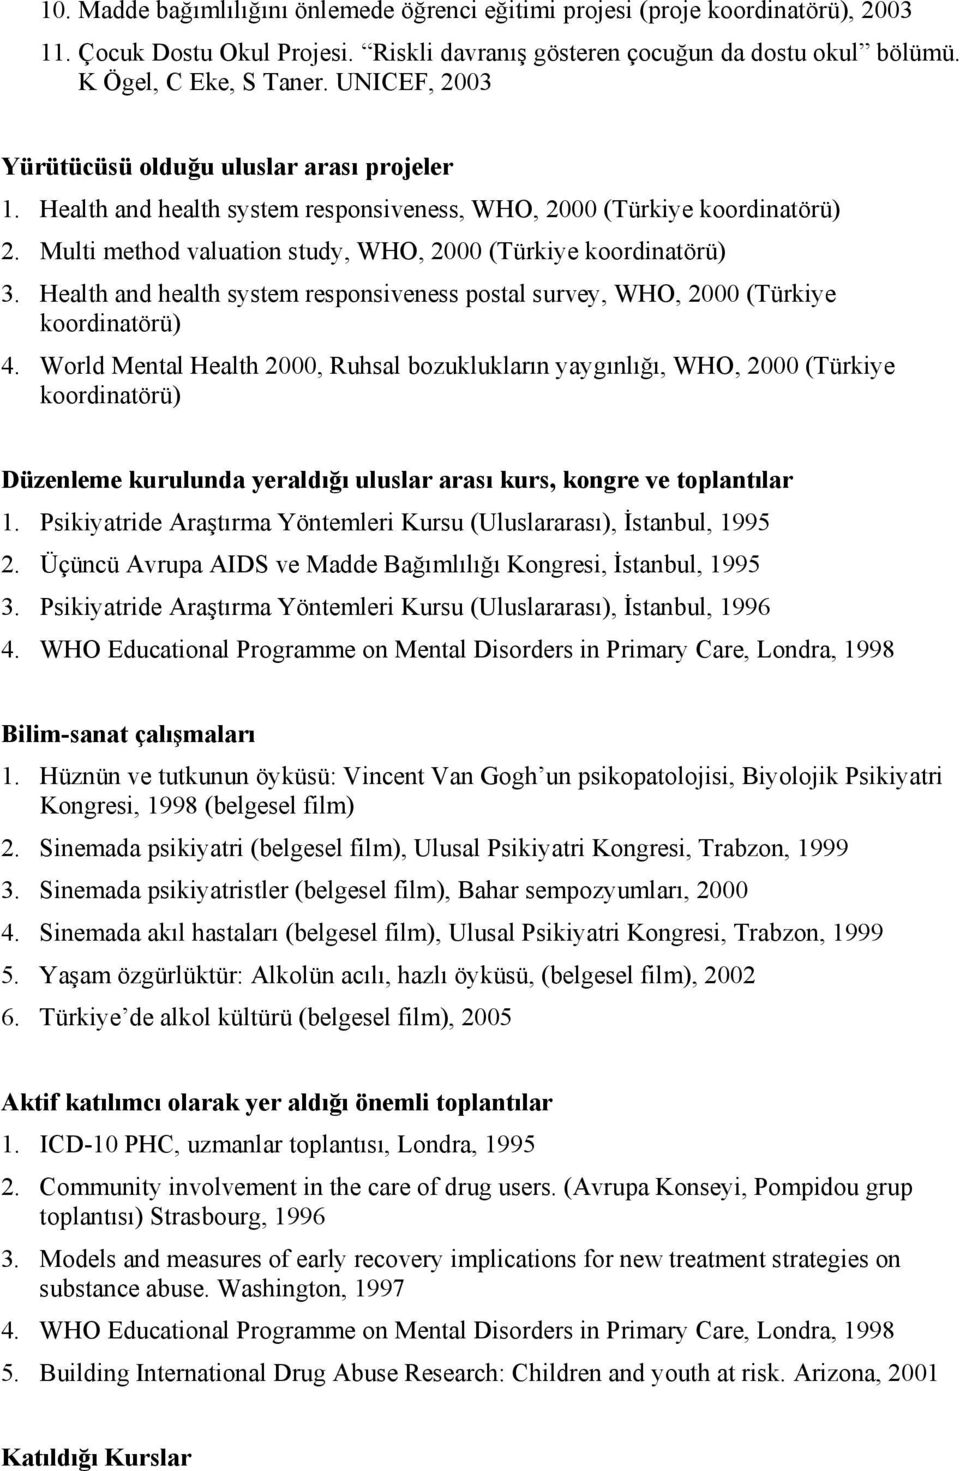 Health and health system responsiveness postal survey, WHO, 2000 (Türkiye koordinatörü) 4.